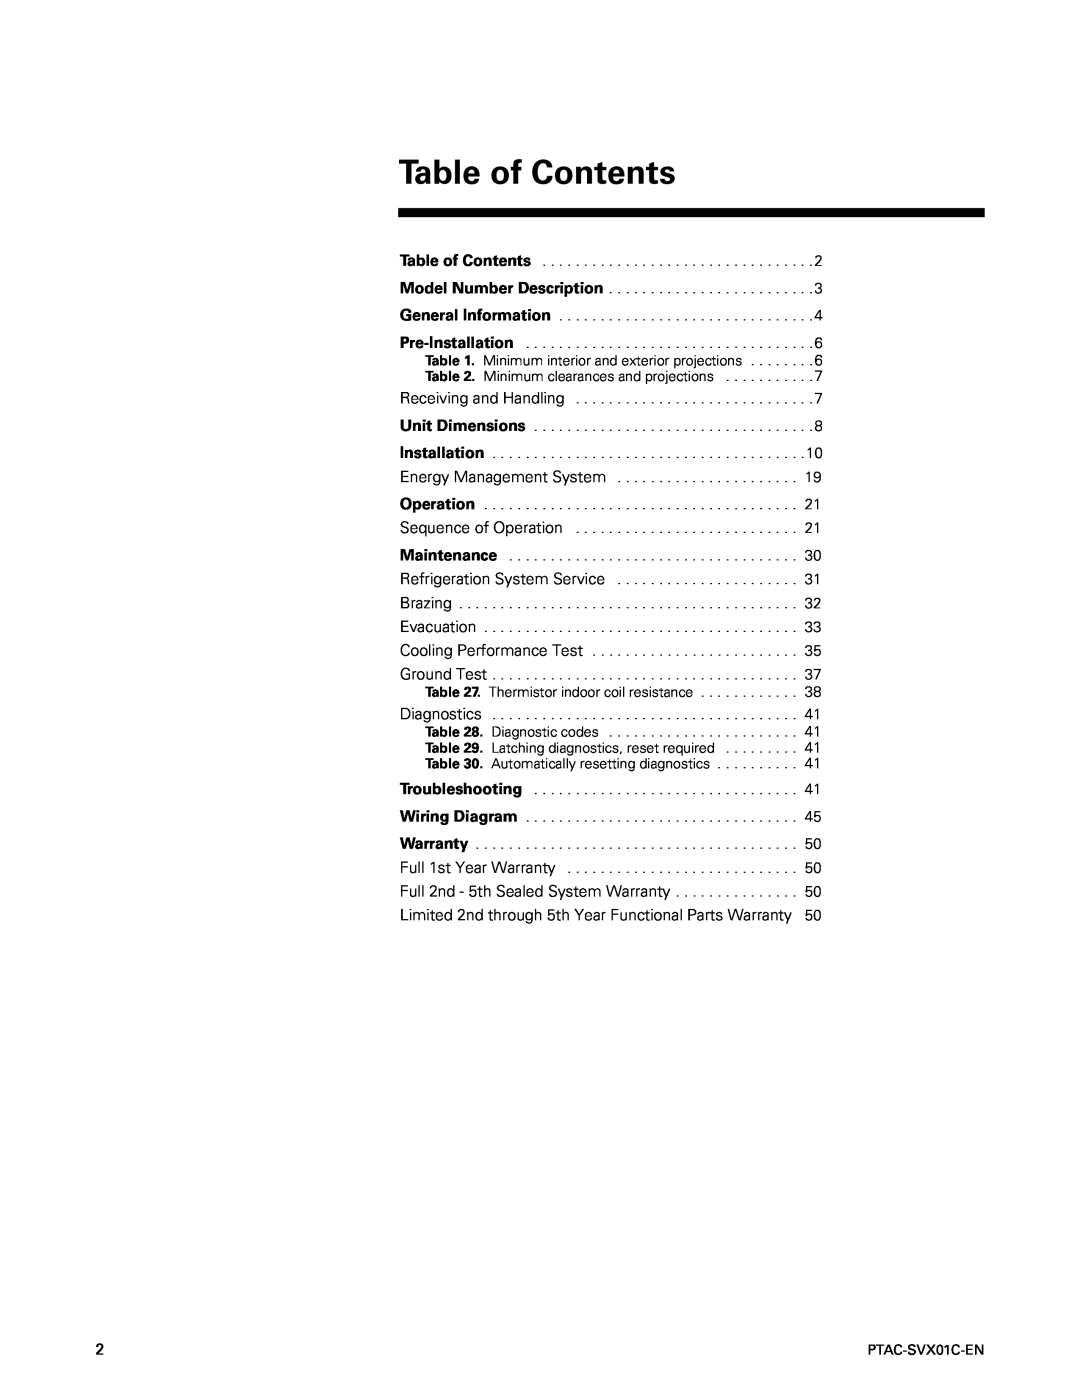 Trane PTAC-SVX01C-EN manual Table of Contents, Operation, Warranty 